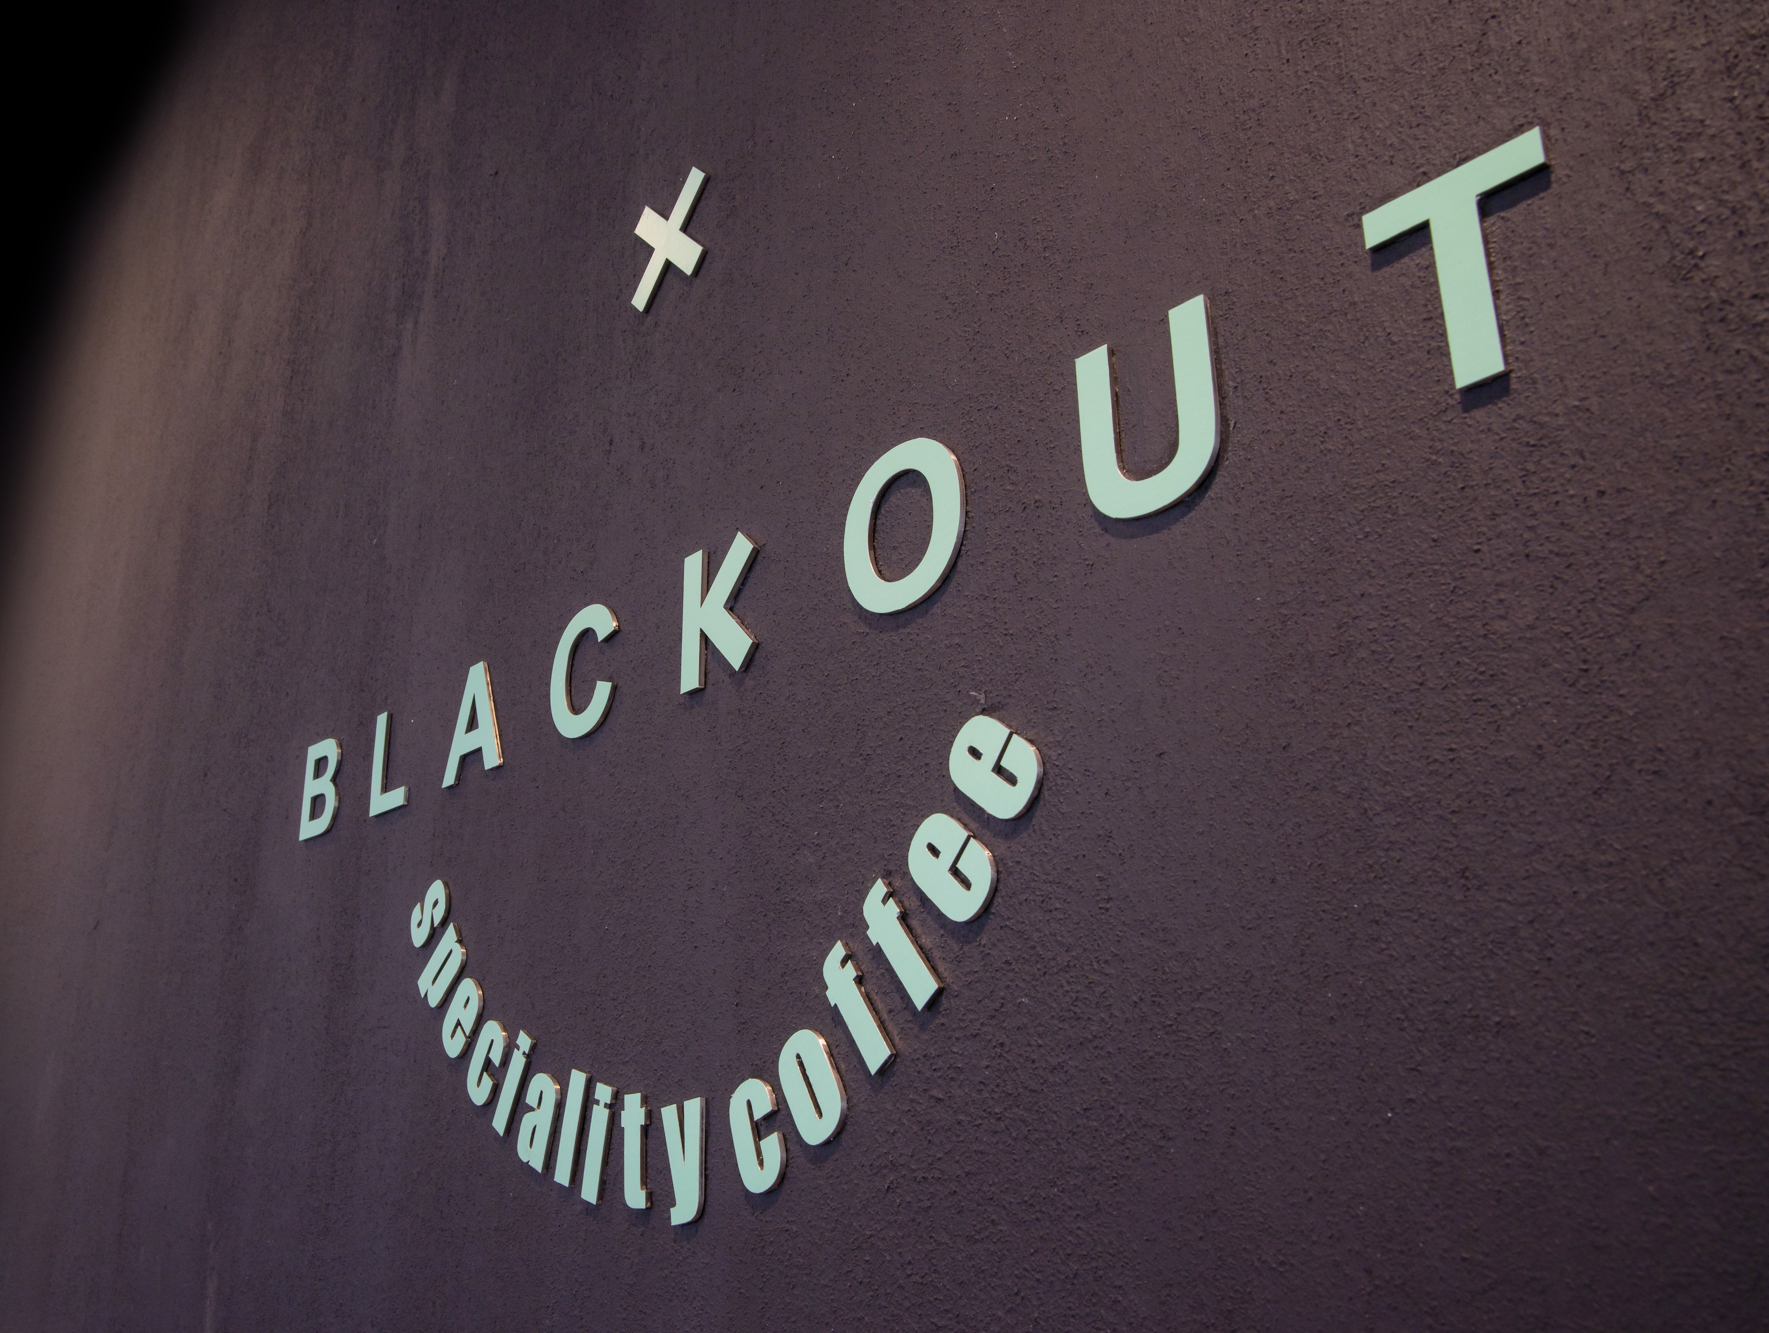 https://boweandpartners.com/wp-content/uploads/Projects/Architecture/Commercial/Blackout/Blackout-cafe01-.jpg